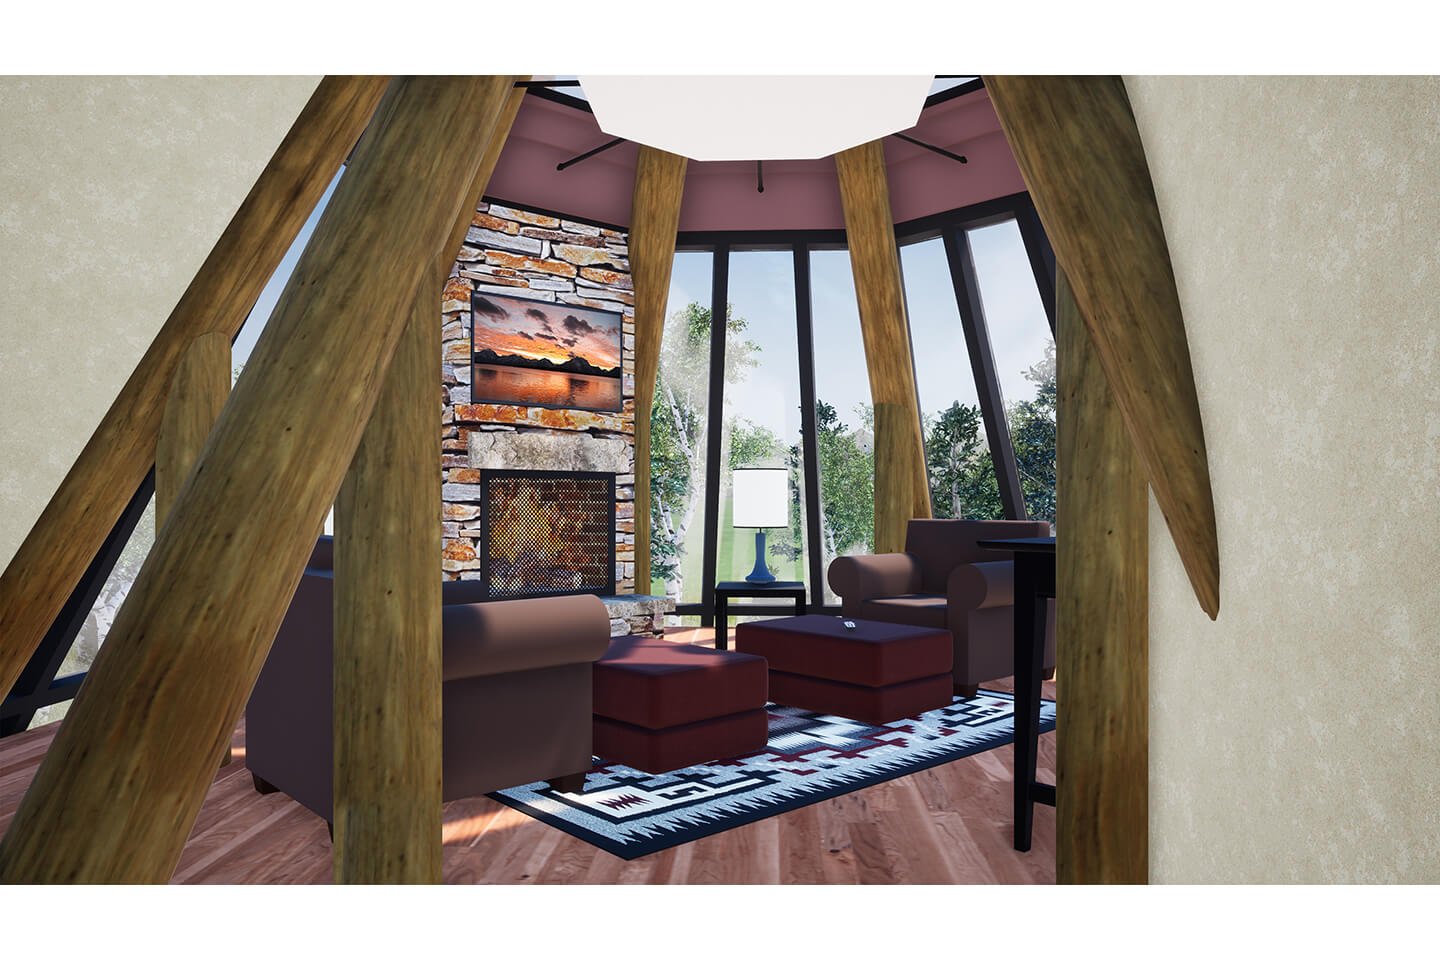 3D rendering of living room in glass teepee